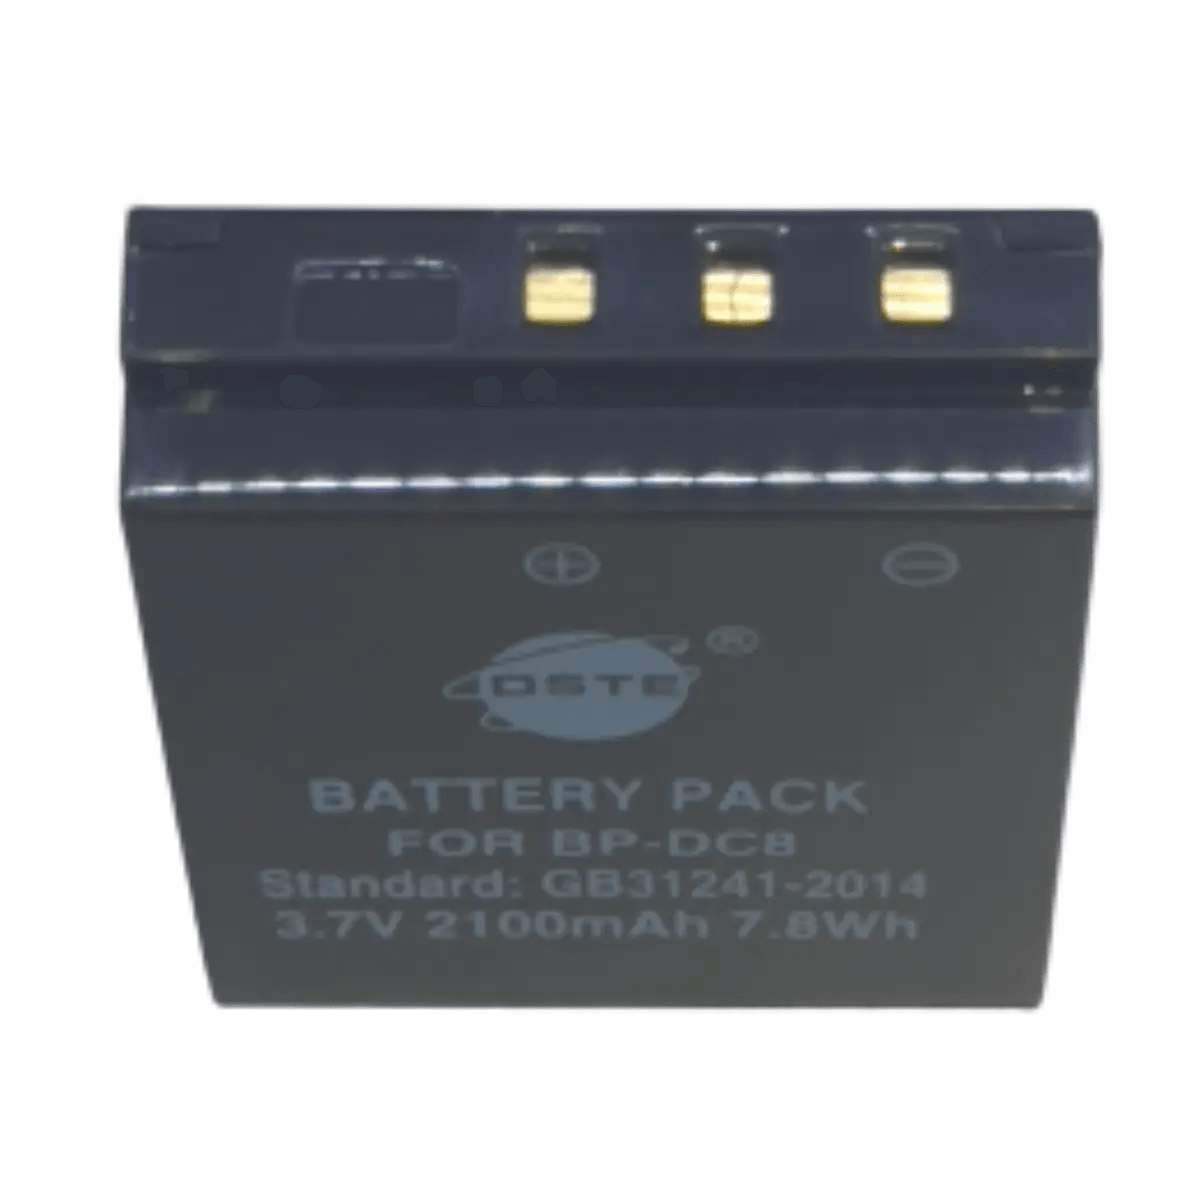 Batterie Leica BP-DC8